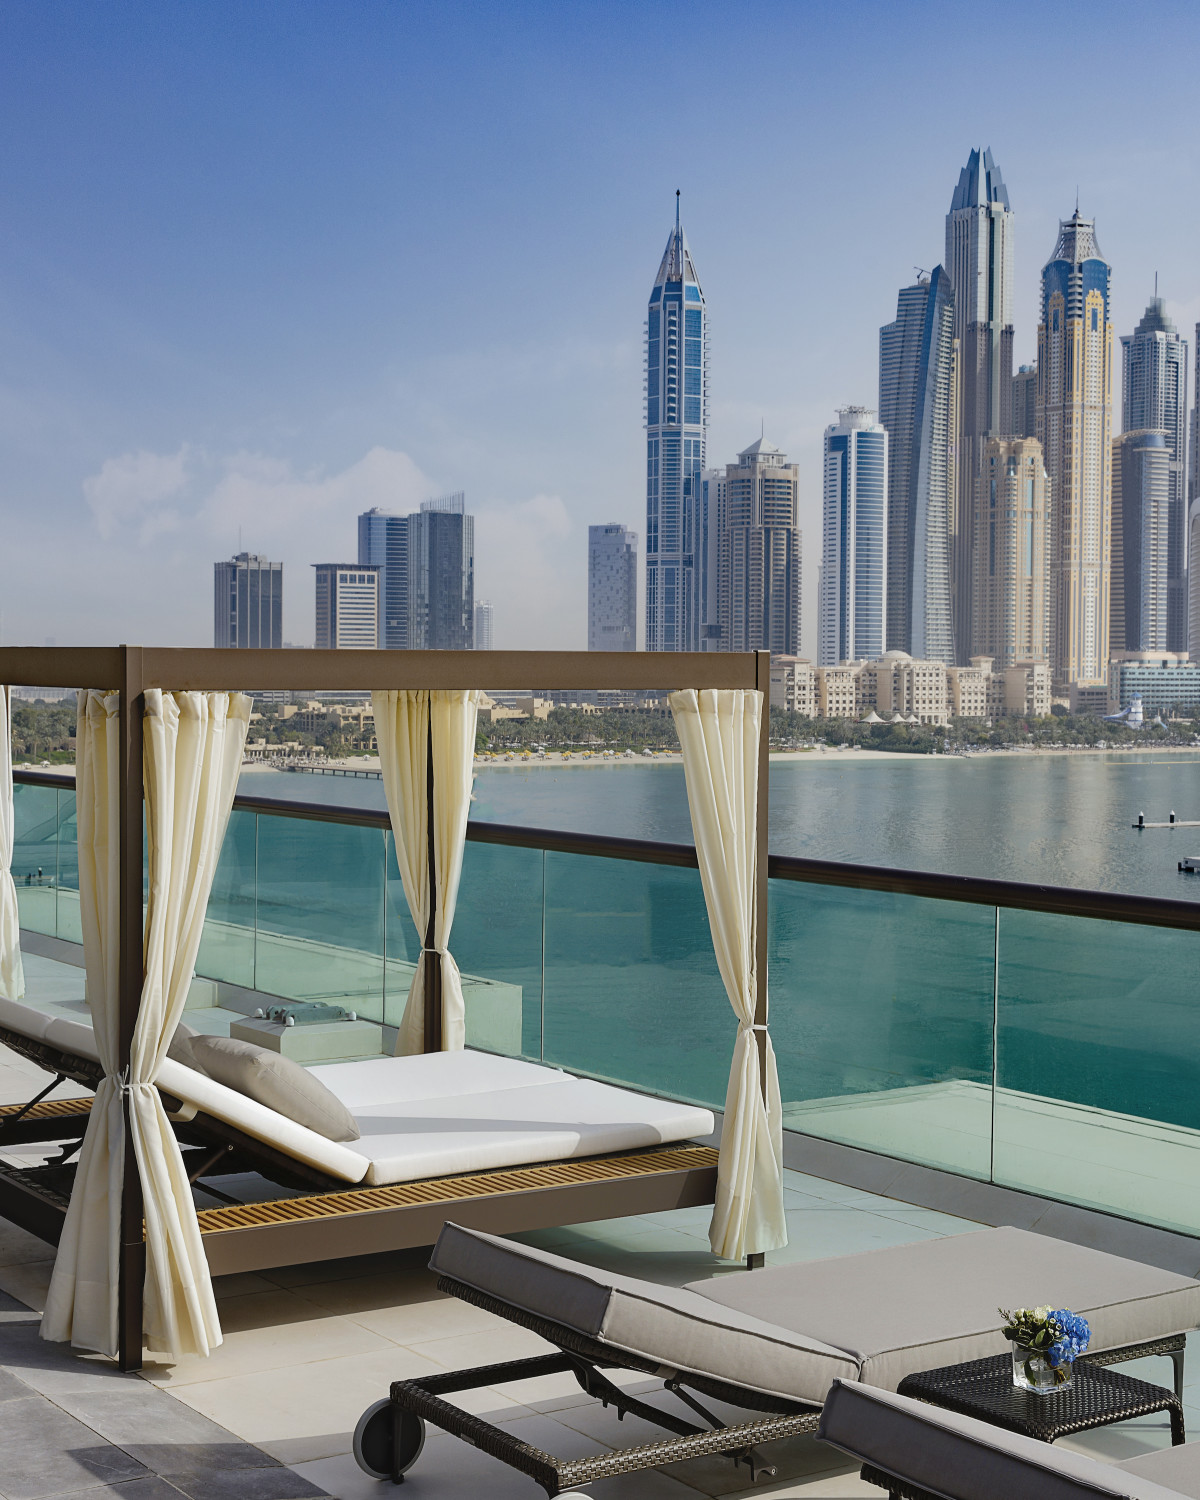 Chic pool and cabanas overlooking Dubai